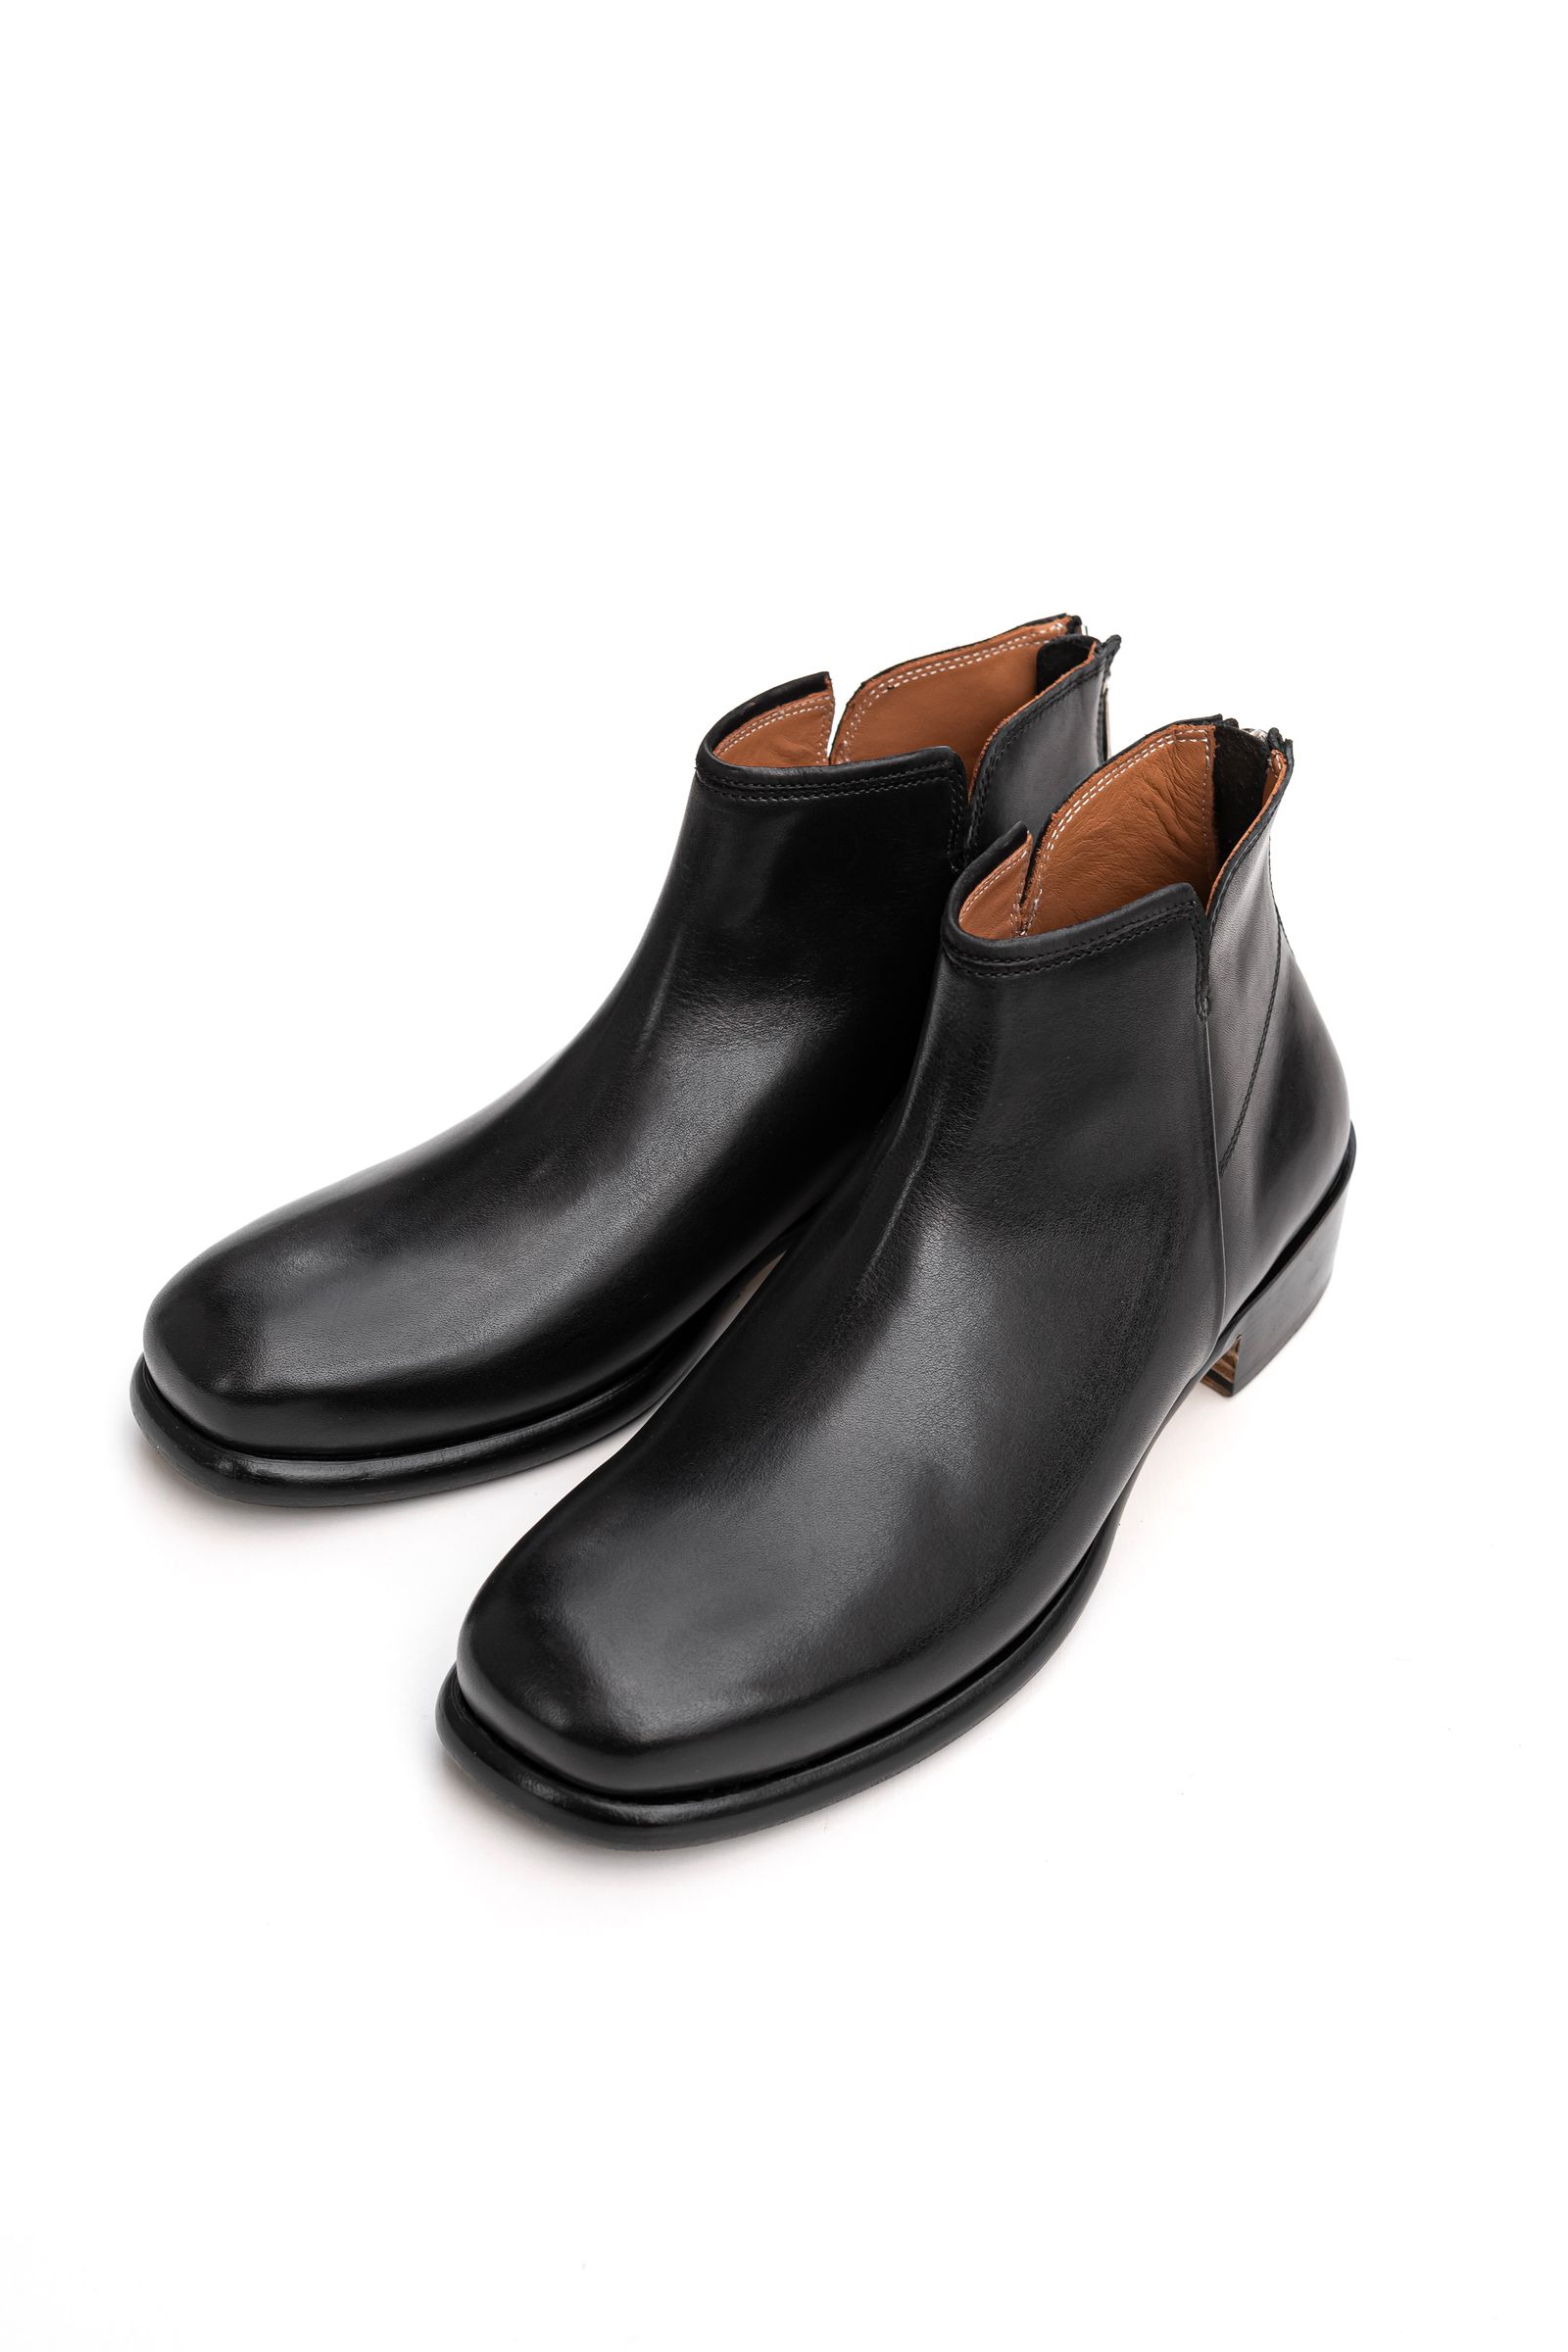 EARLE - Back zip short boots / Black | Retikle Online Store